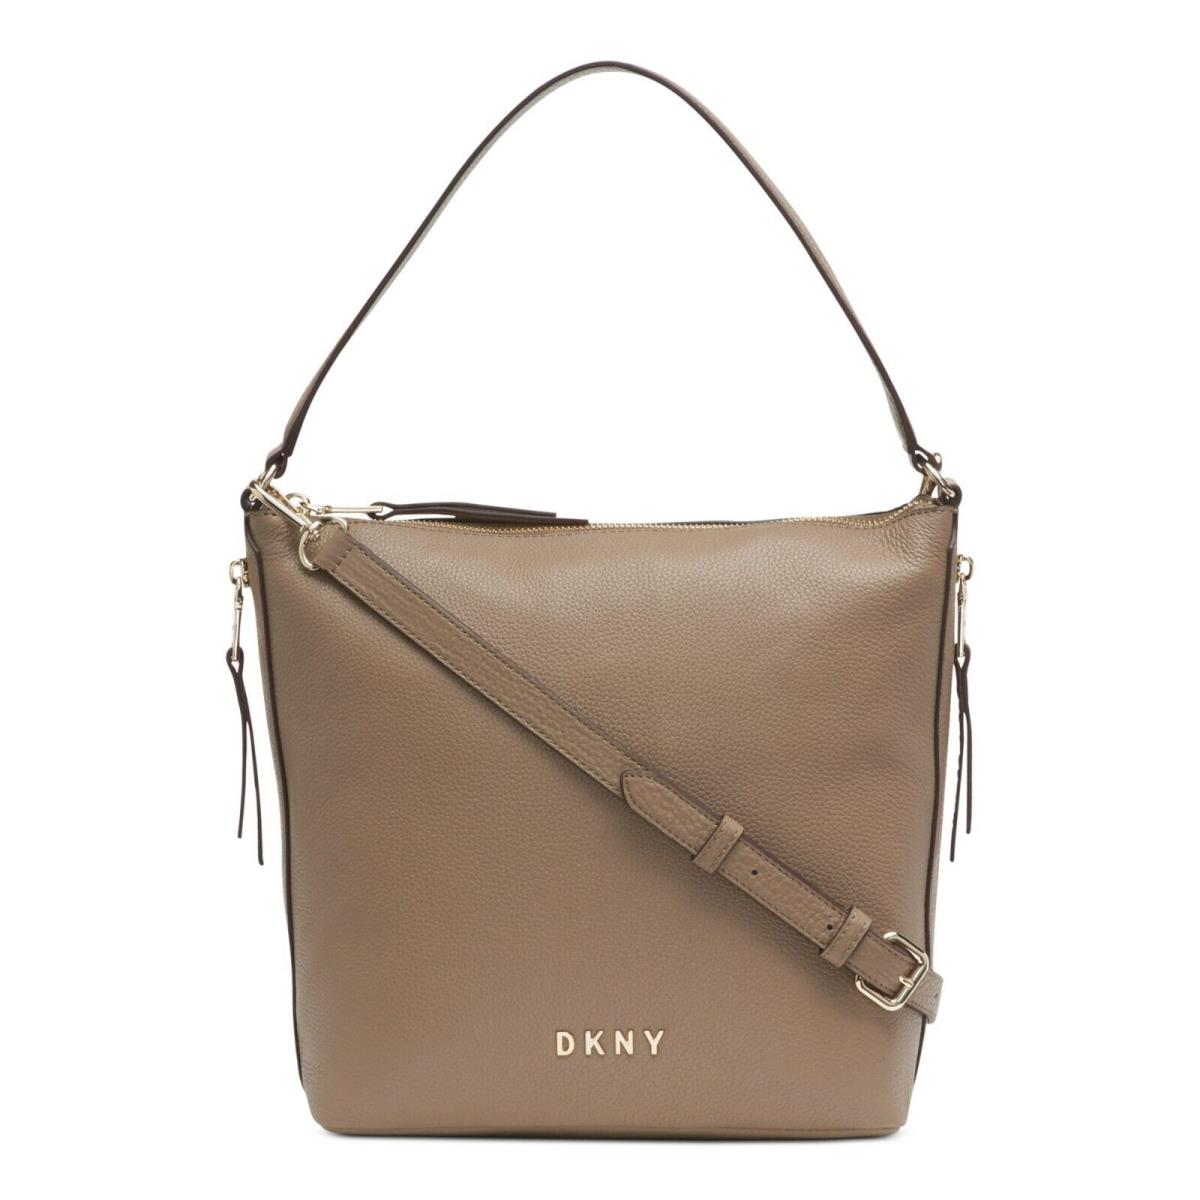 Dkny Leather Purse Hobo Shoulder Bag Tote Crossbody Womens Large Handbag